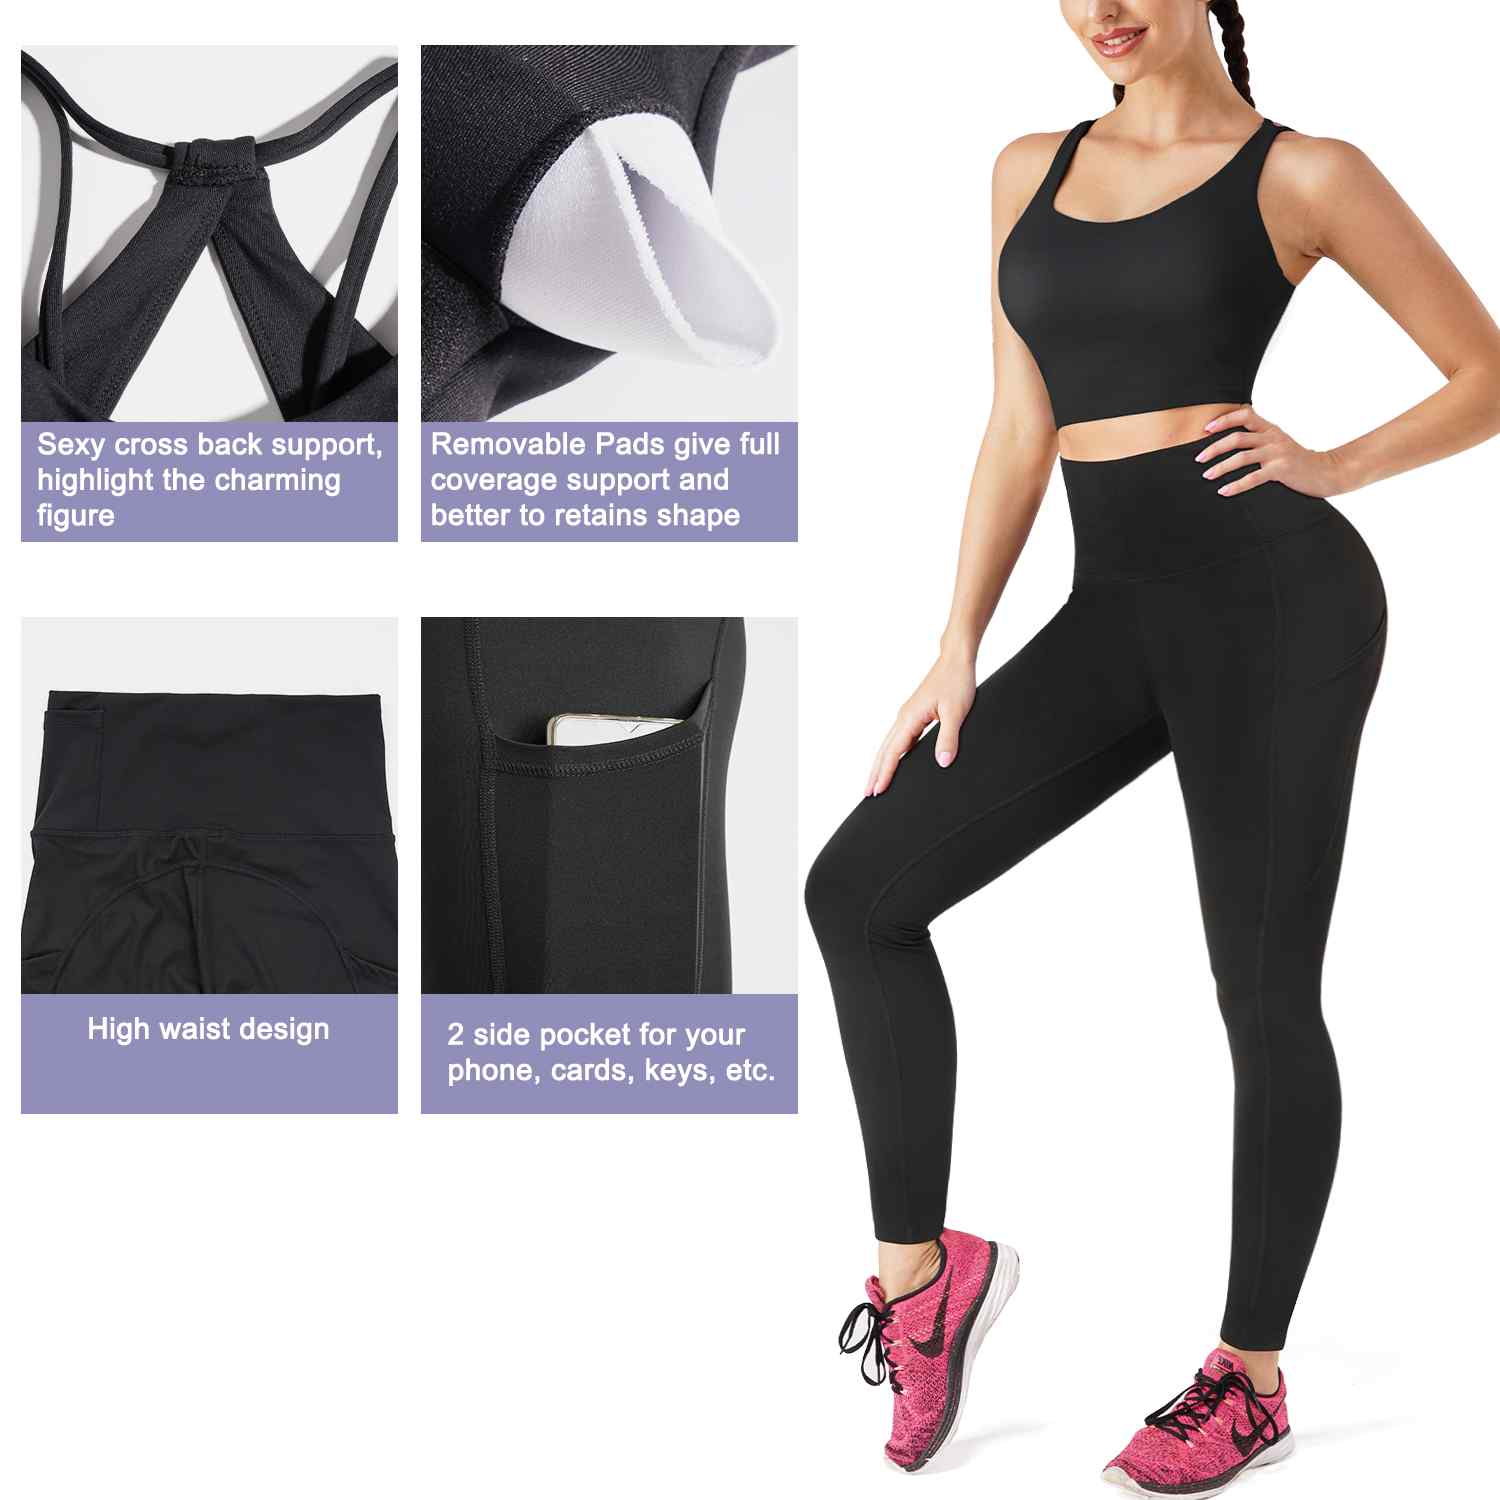 Rohnisch Ladies Tess Sports Bra C / D - Black 301049 - Gym Wear, Yoga  Clothing, Pilates